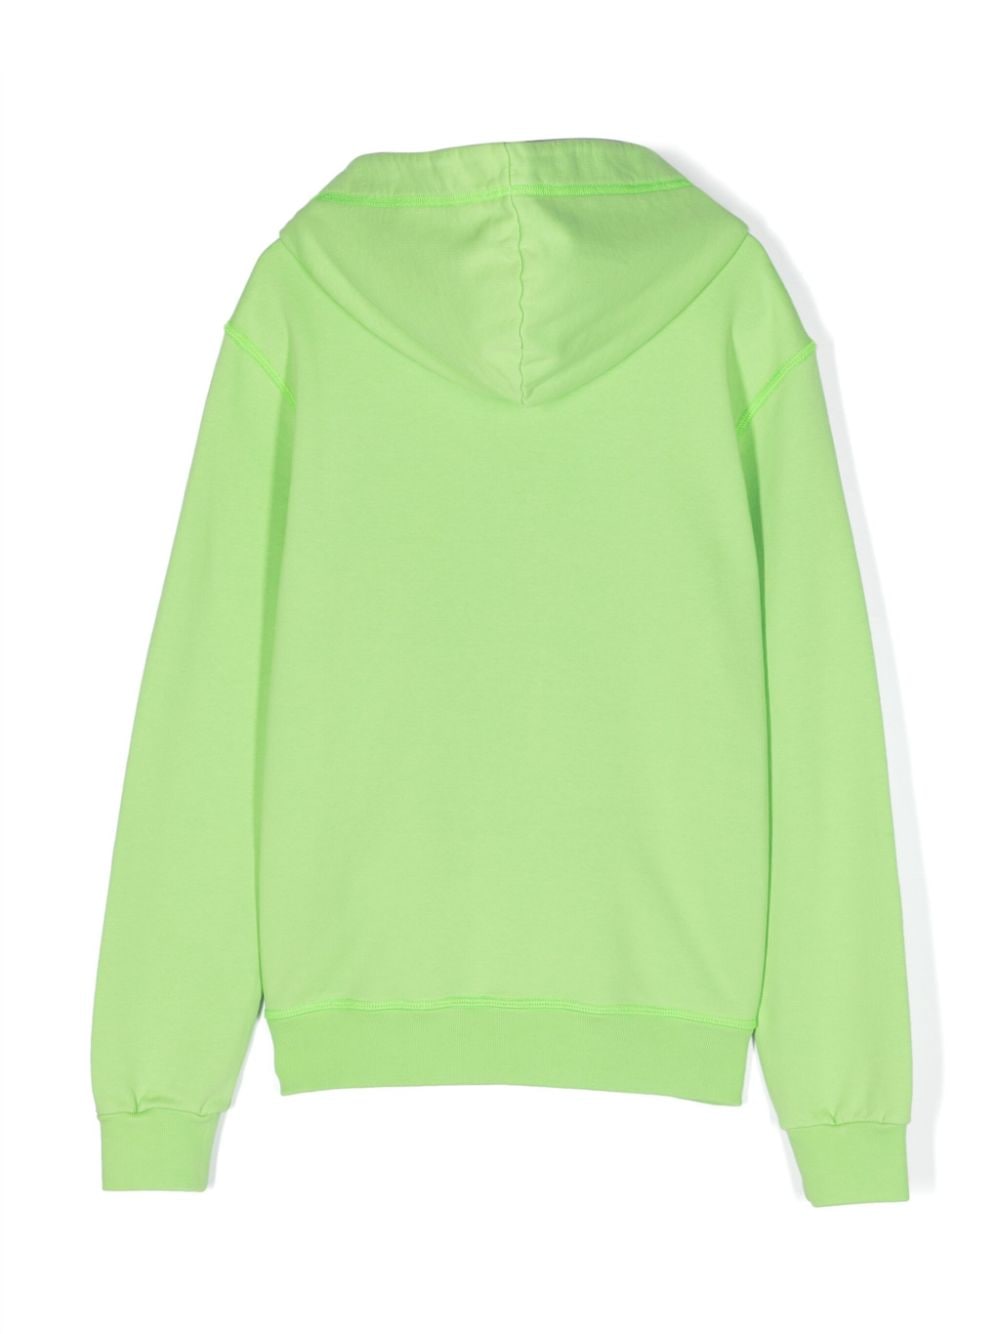 Green sweatshirt for boys with ICON logo